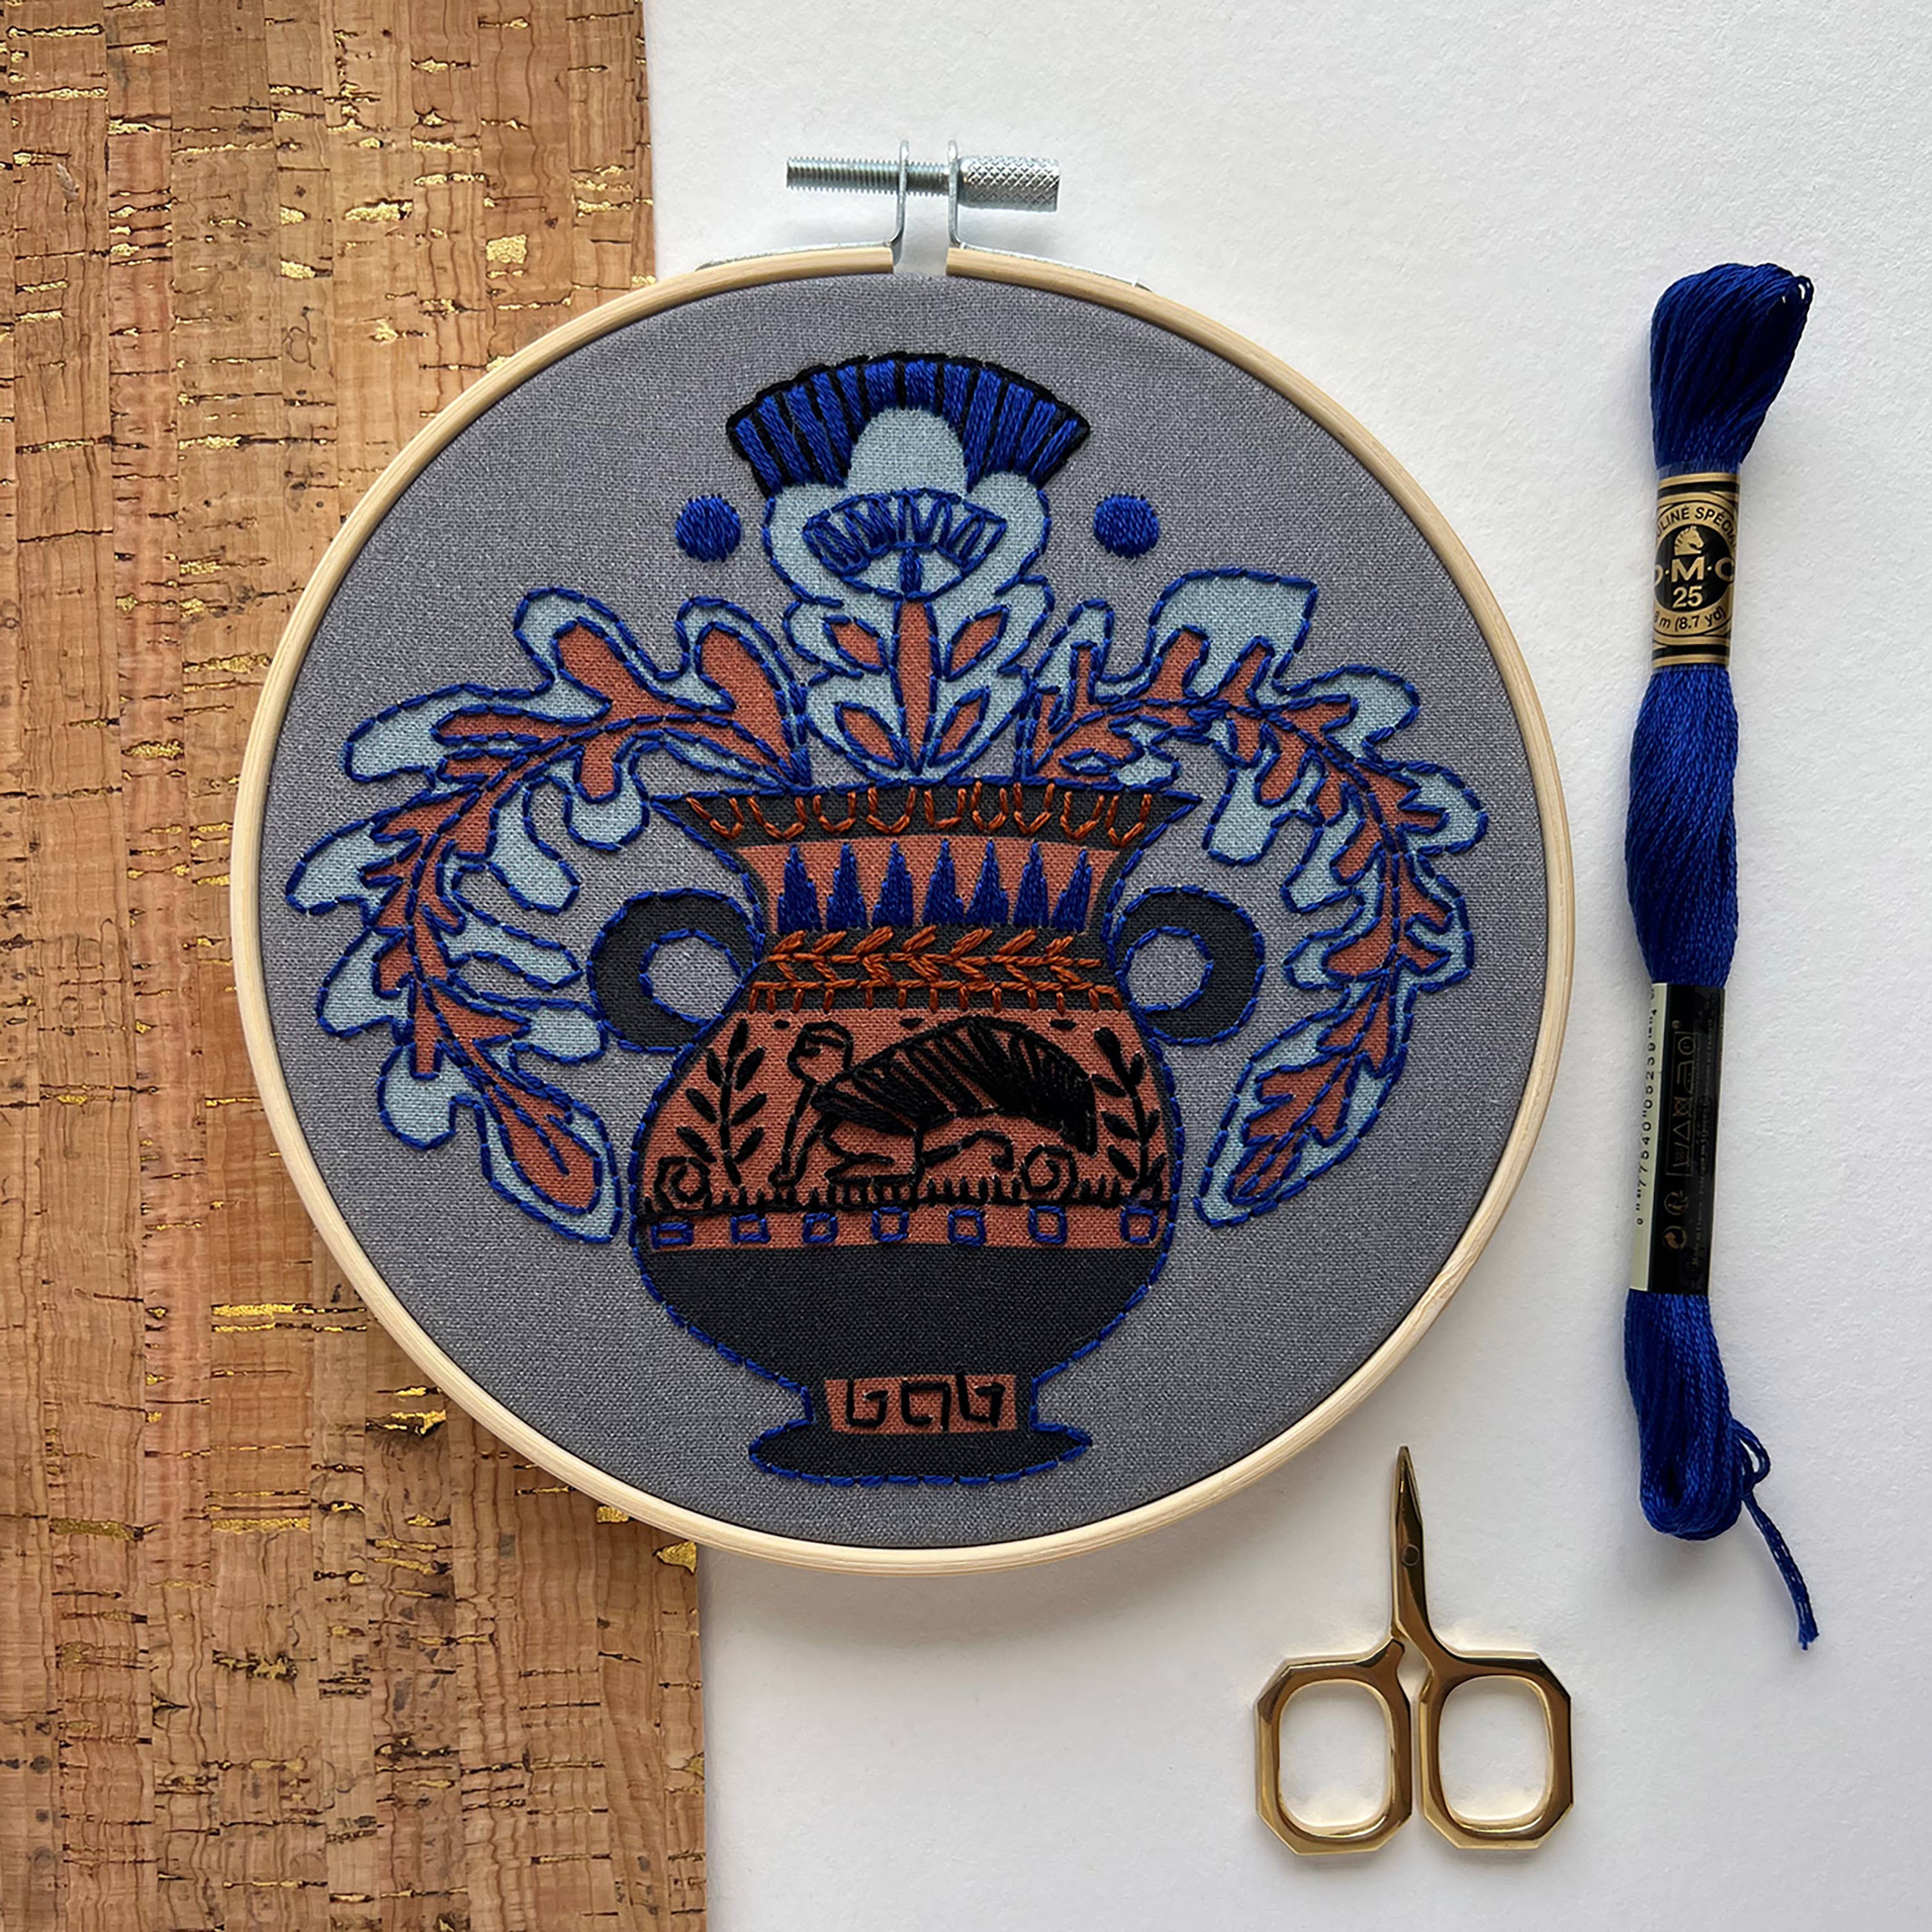 Vase Embroidery Kit